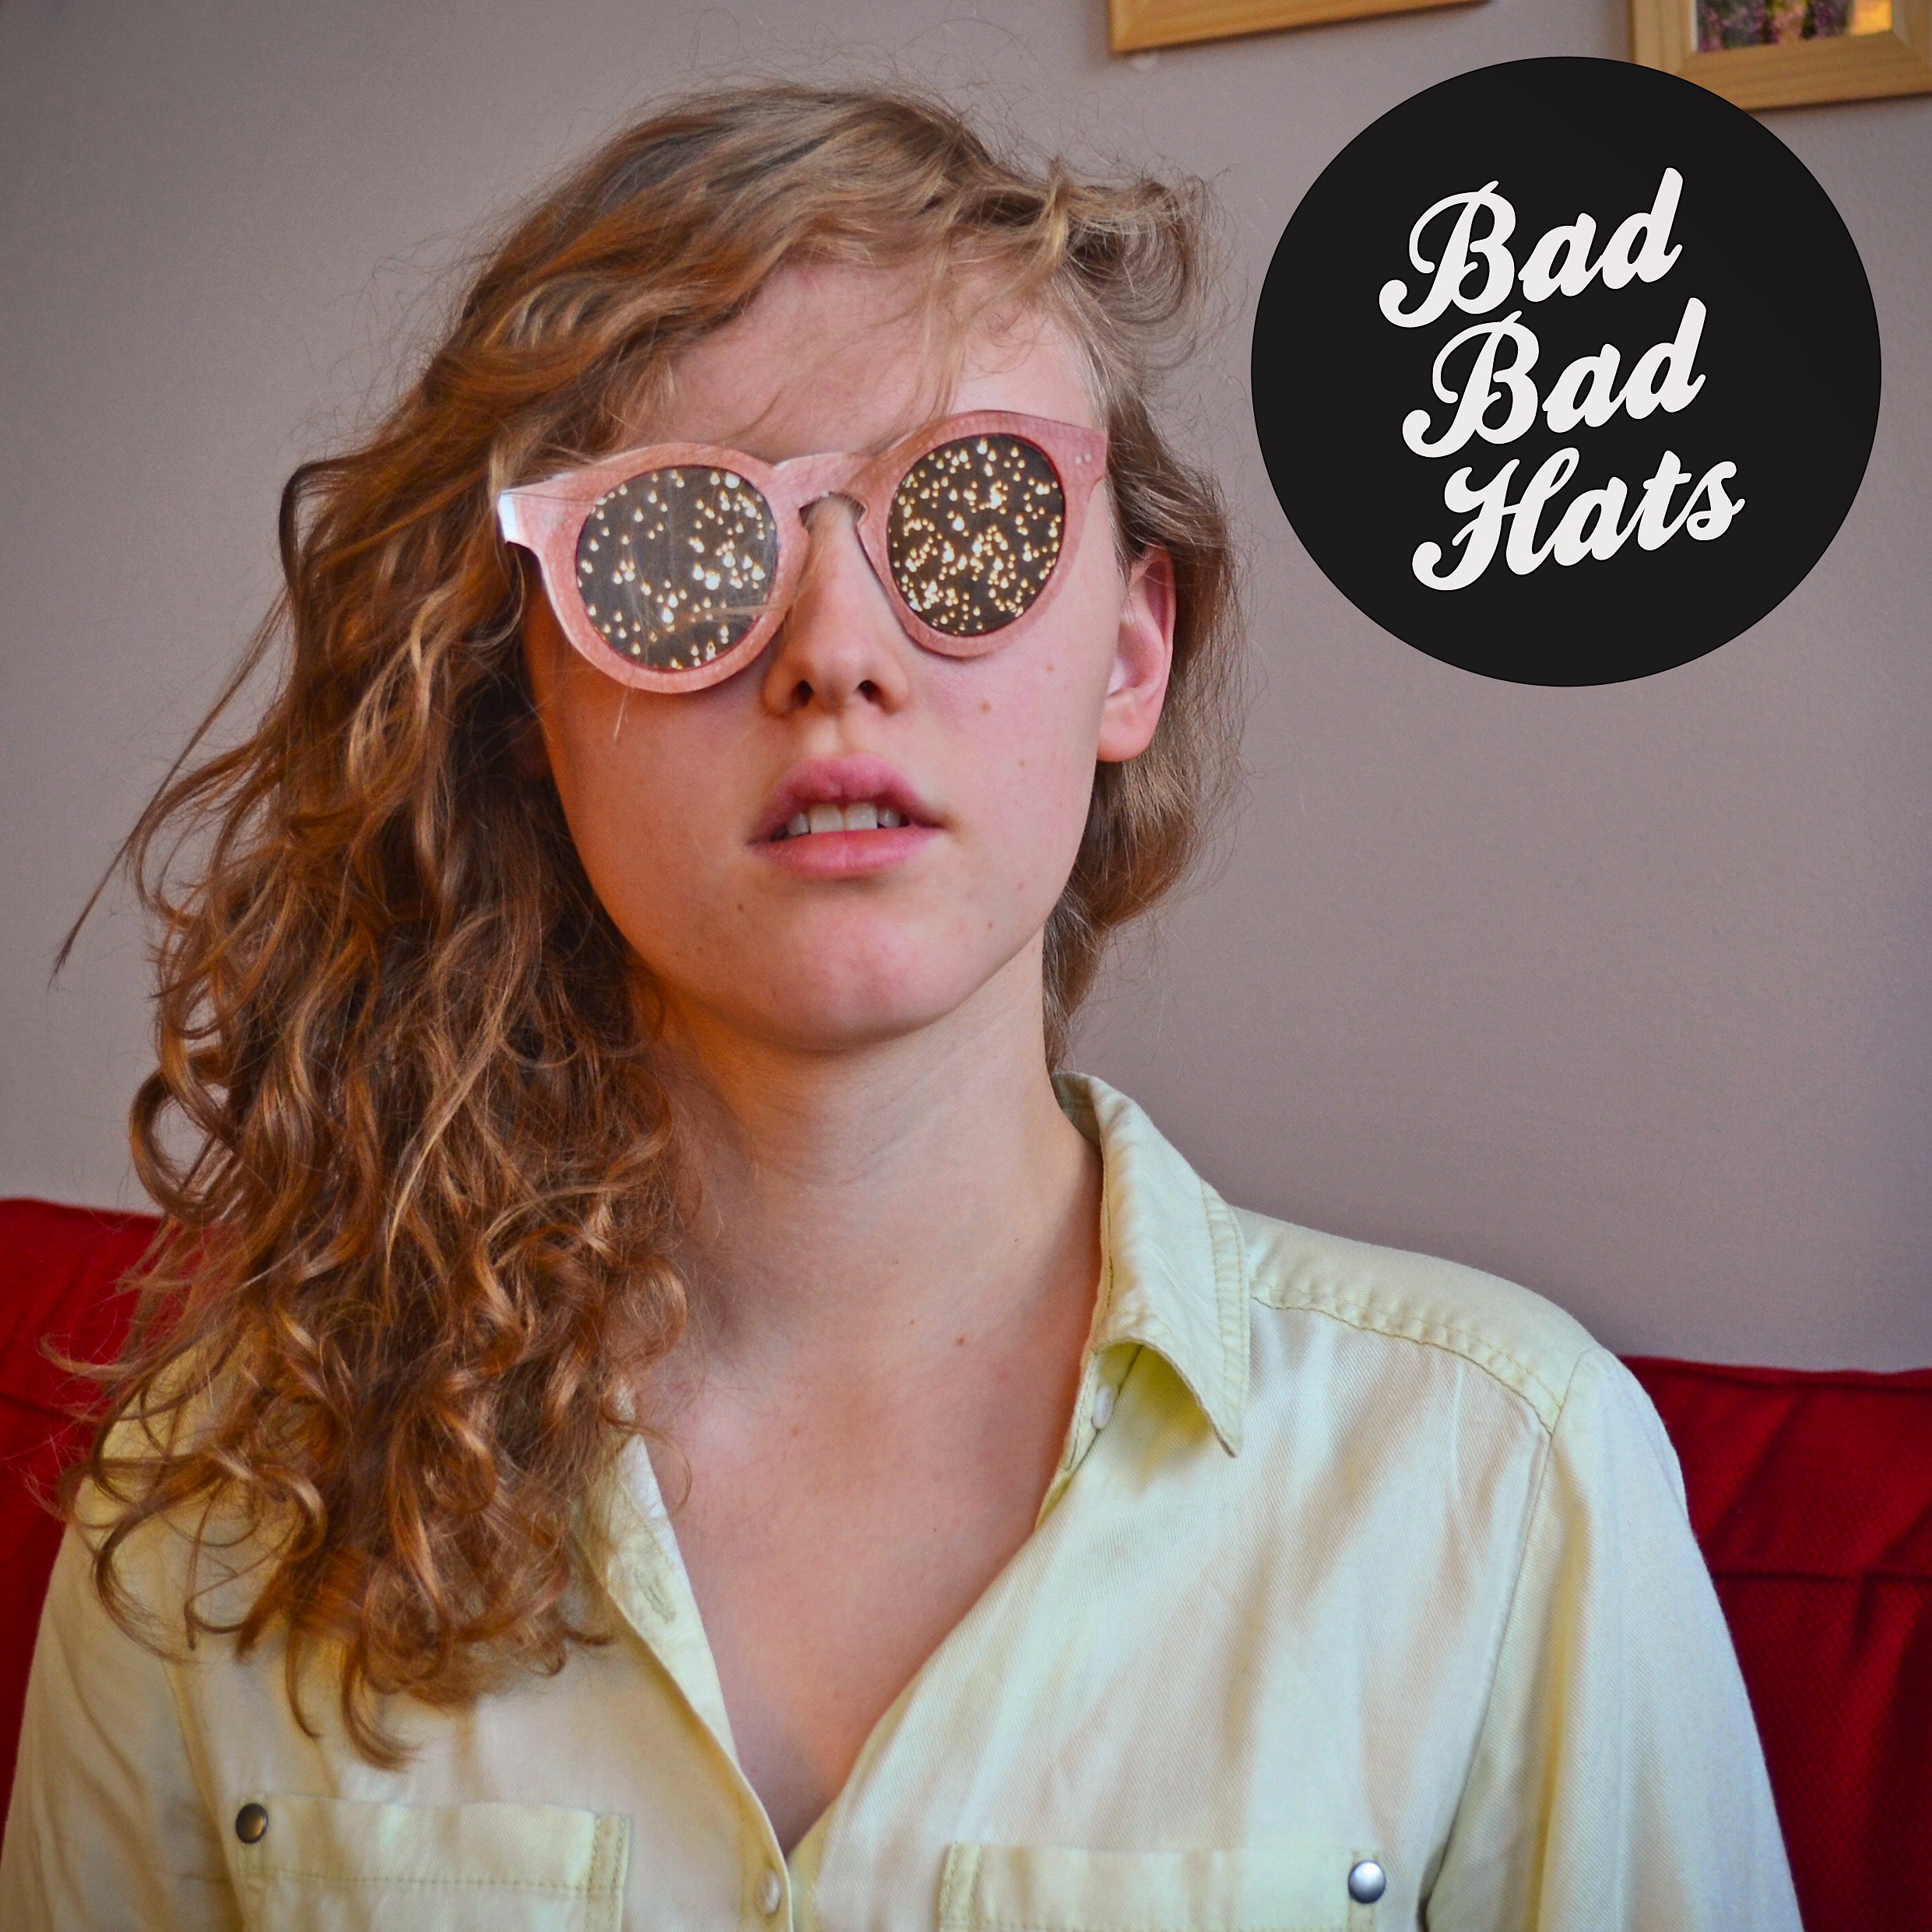 Bad Bad. Трек Bad Bad Bad. The Bad! Как выглядит. Bad hat